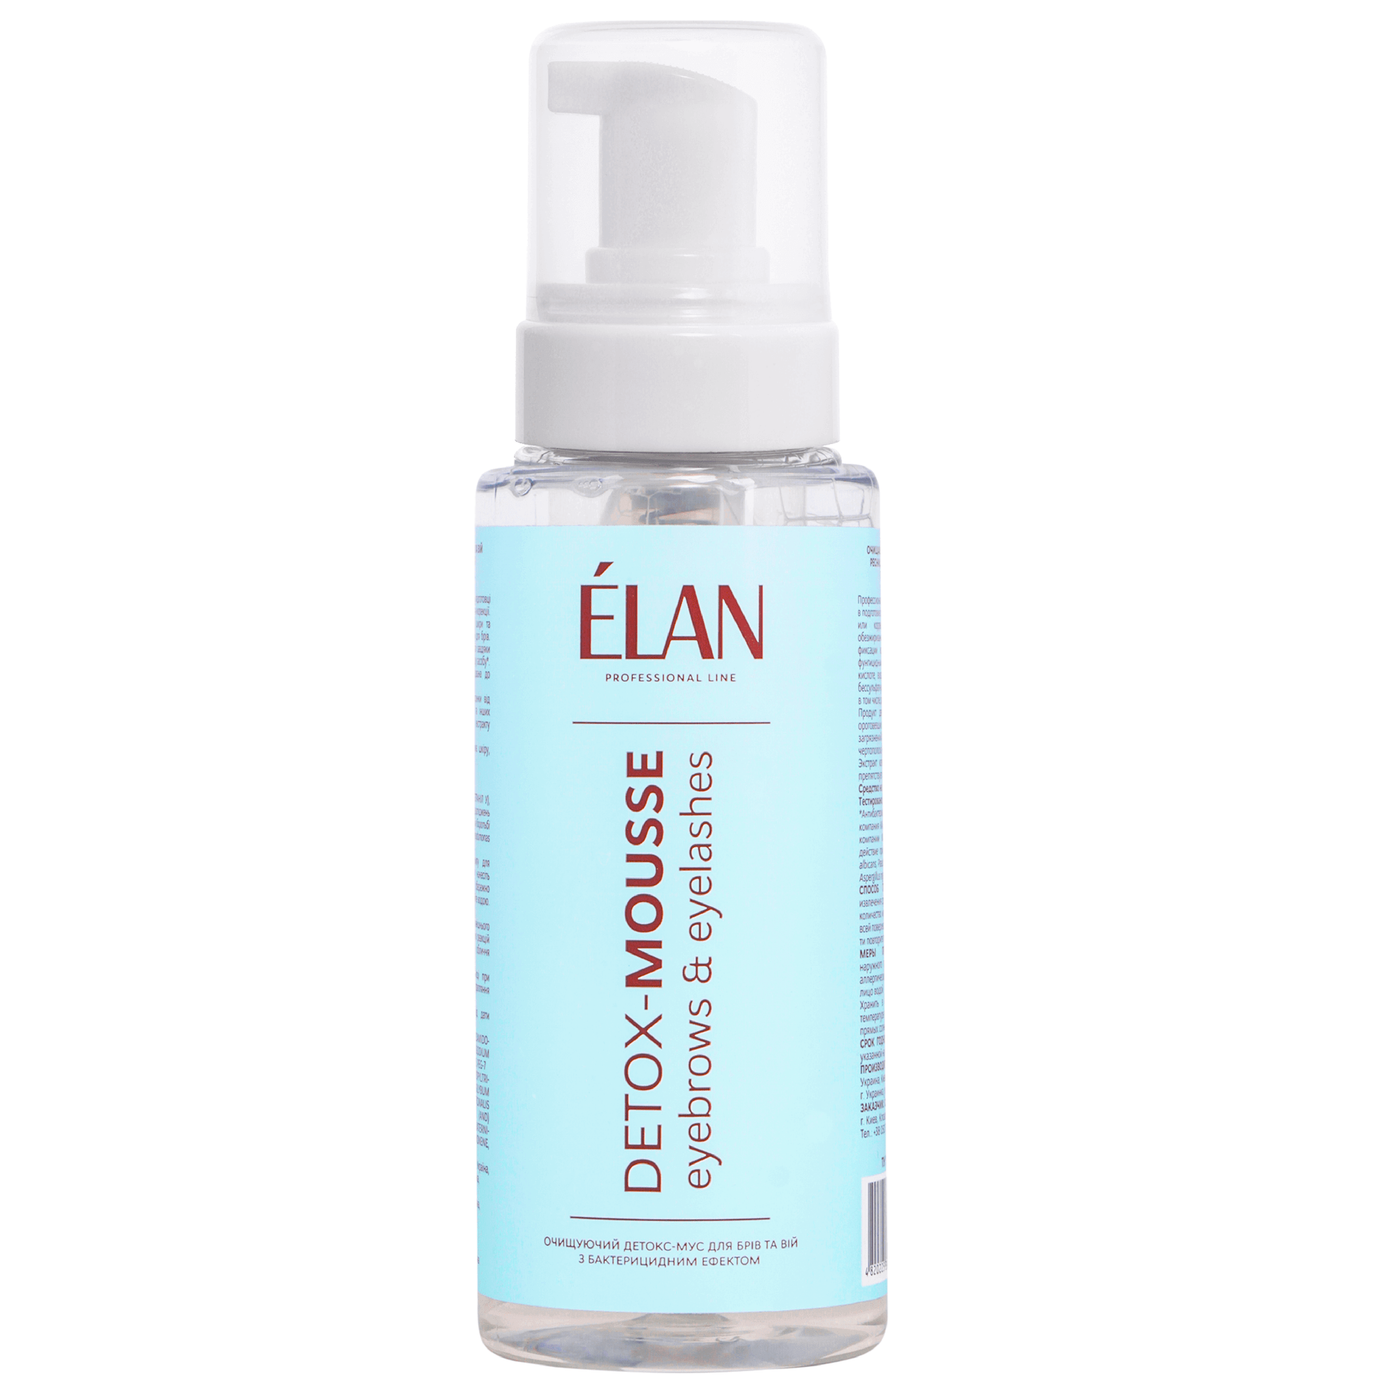 ELAN - Cleansing Detox-Mousse for Eyebrows and Eyelashes